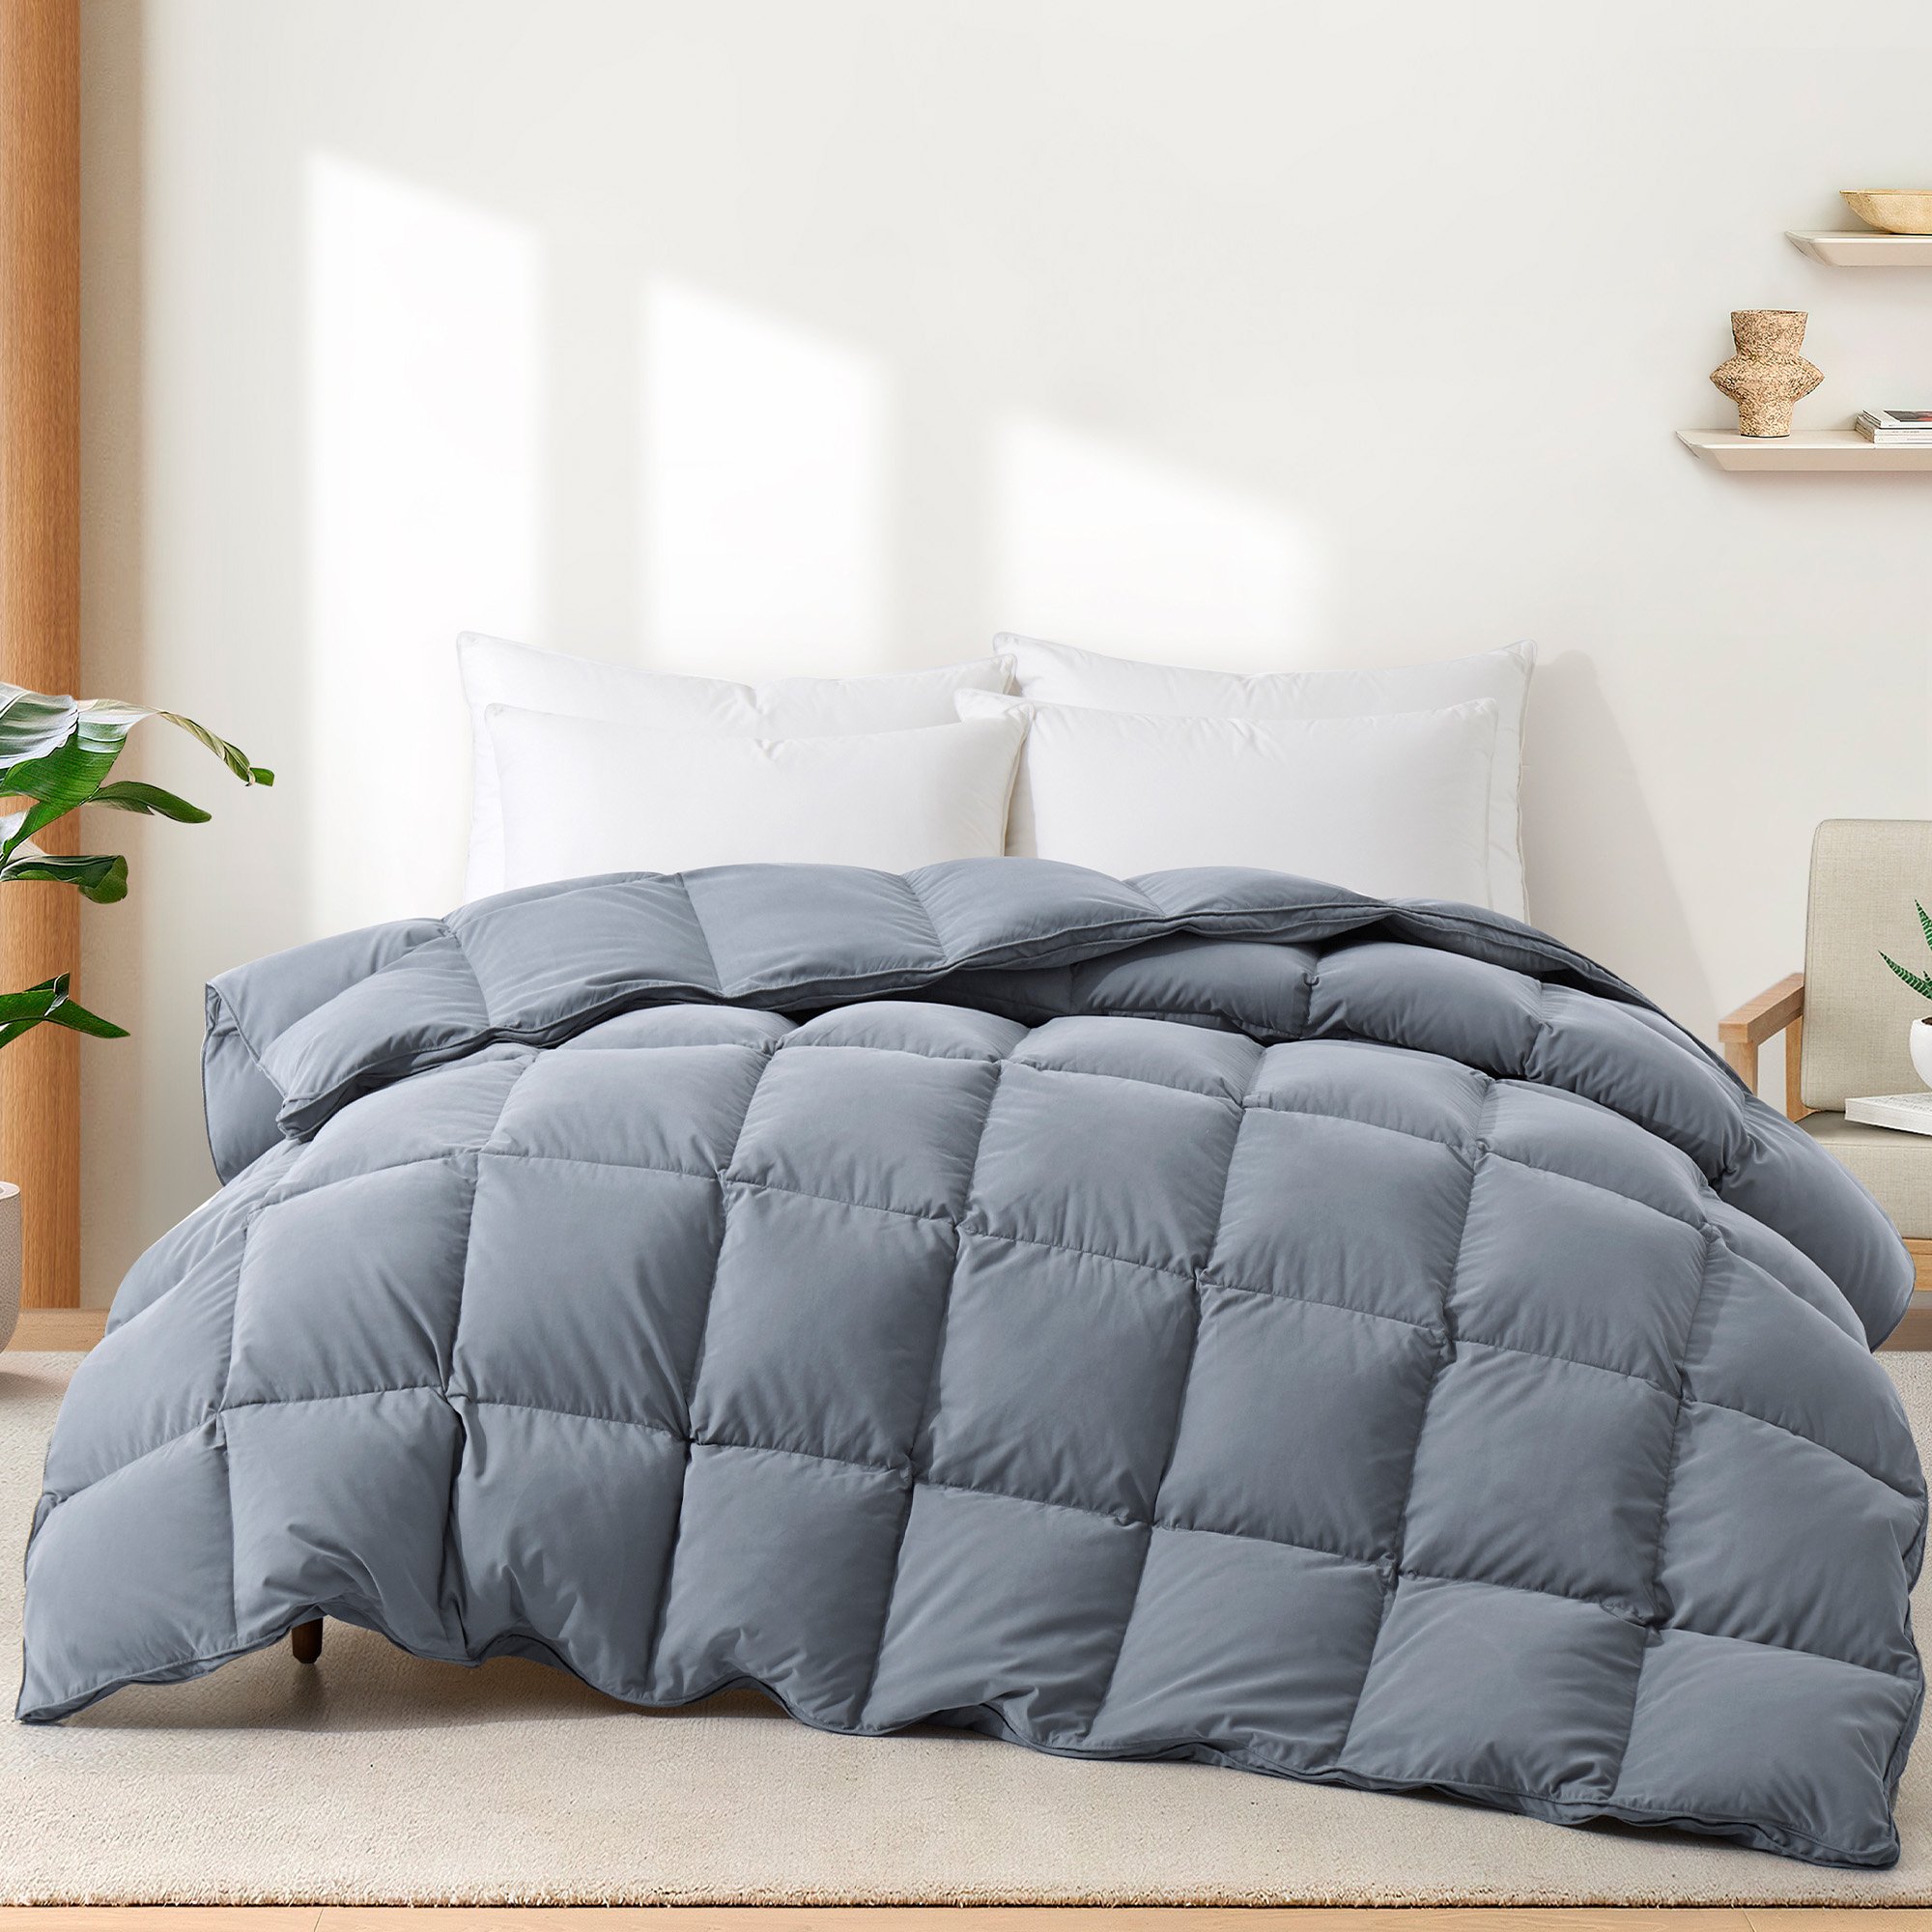 All-Season Goose Down Comforter Duvet Insert, Goose Down & Feather Fiber Fill - Full/Queen